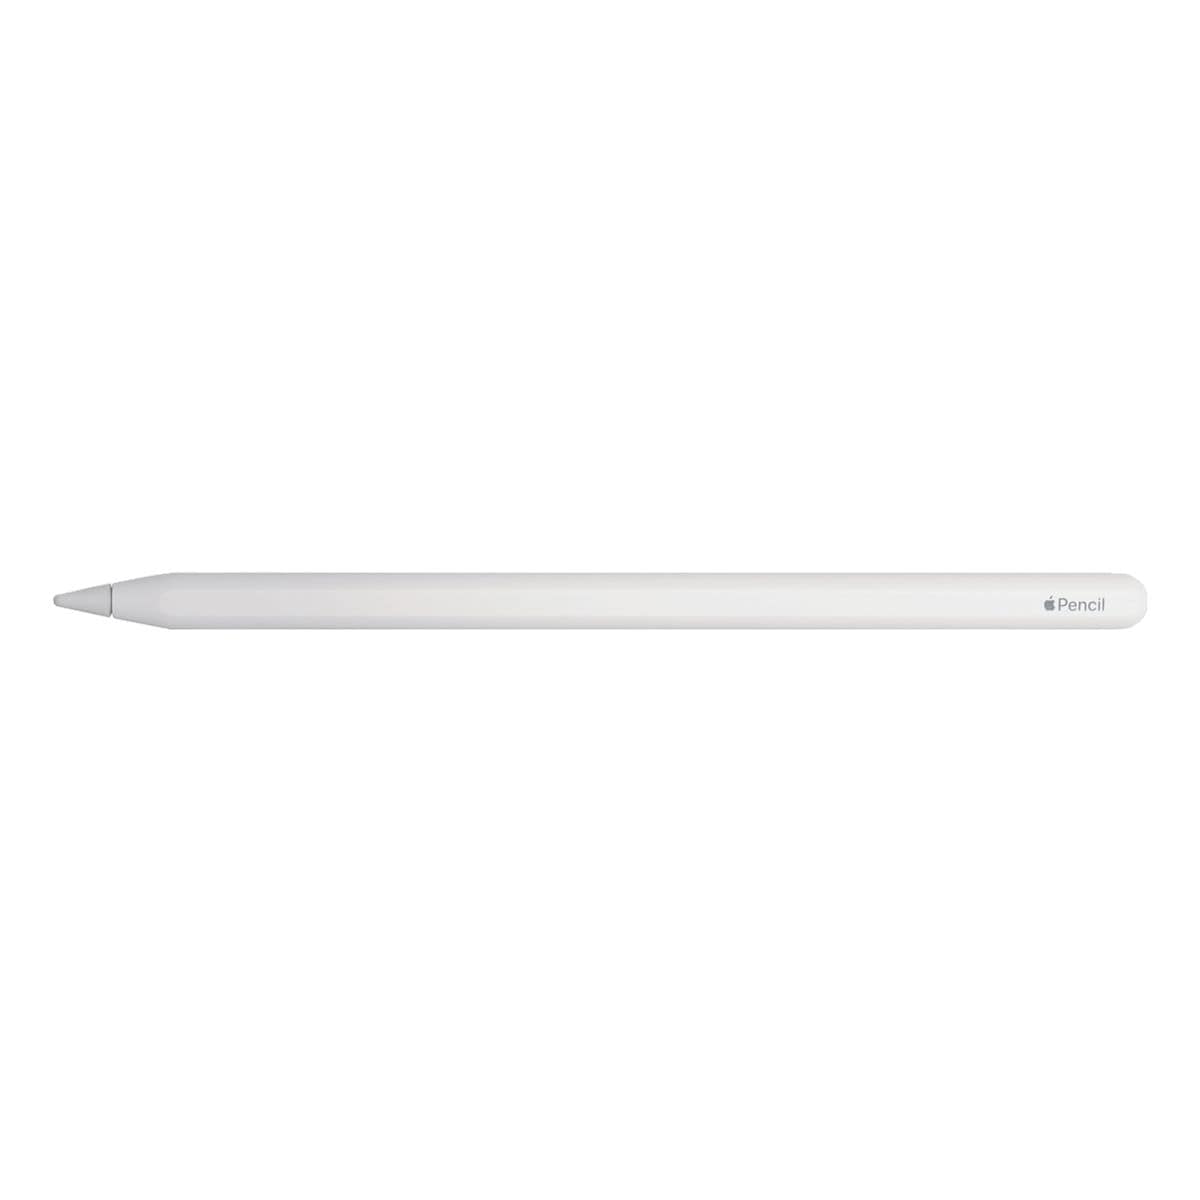 Apple Apple pencil (2me gnration) pour iPad Air, iPad Pro 11